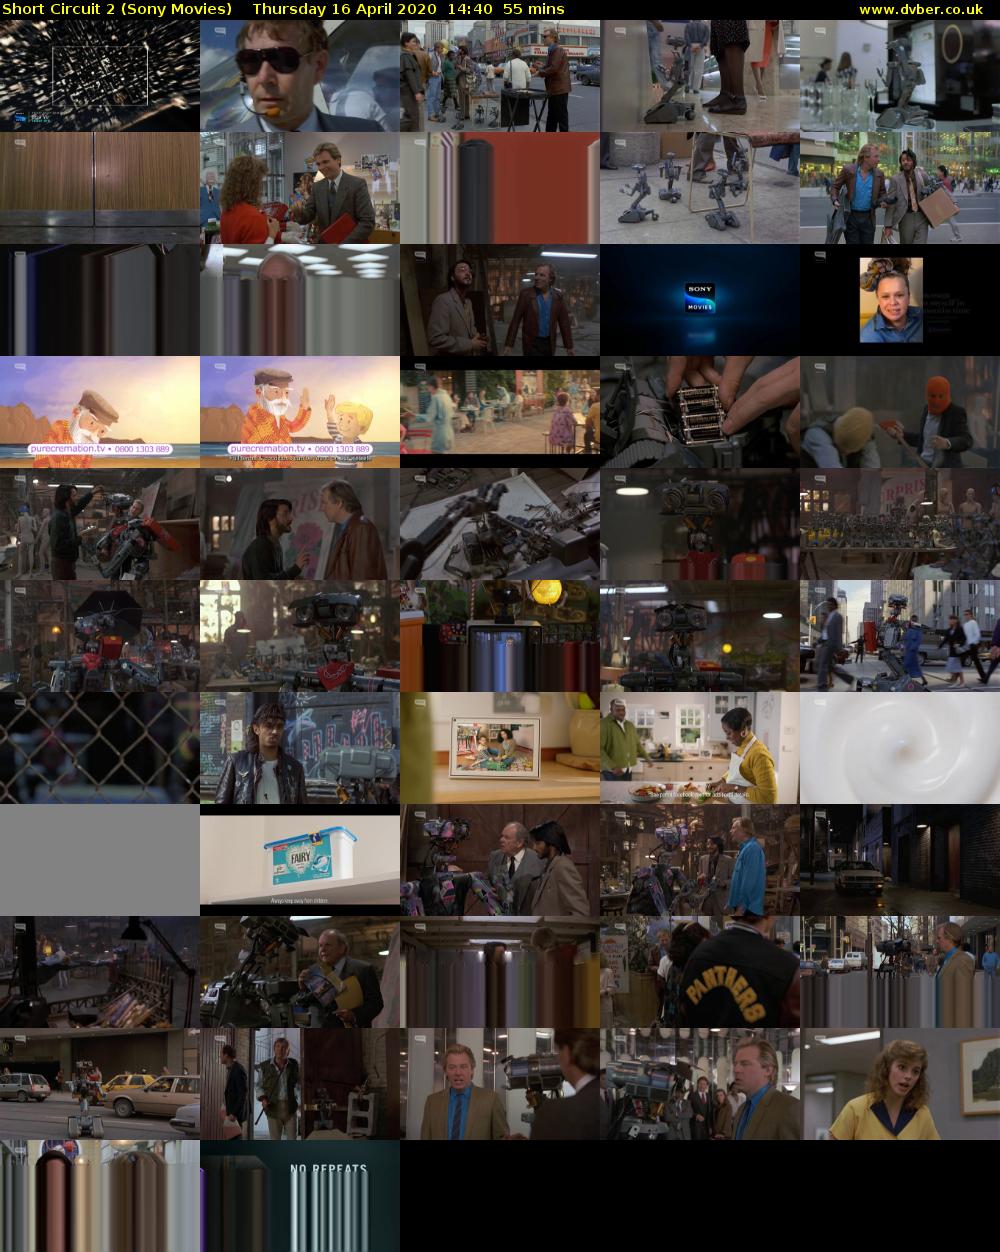 Short Circuit 2 (Sony Movies) Thursday 16 April 2020 14:40 - 15:35